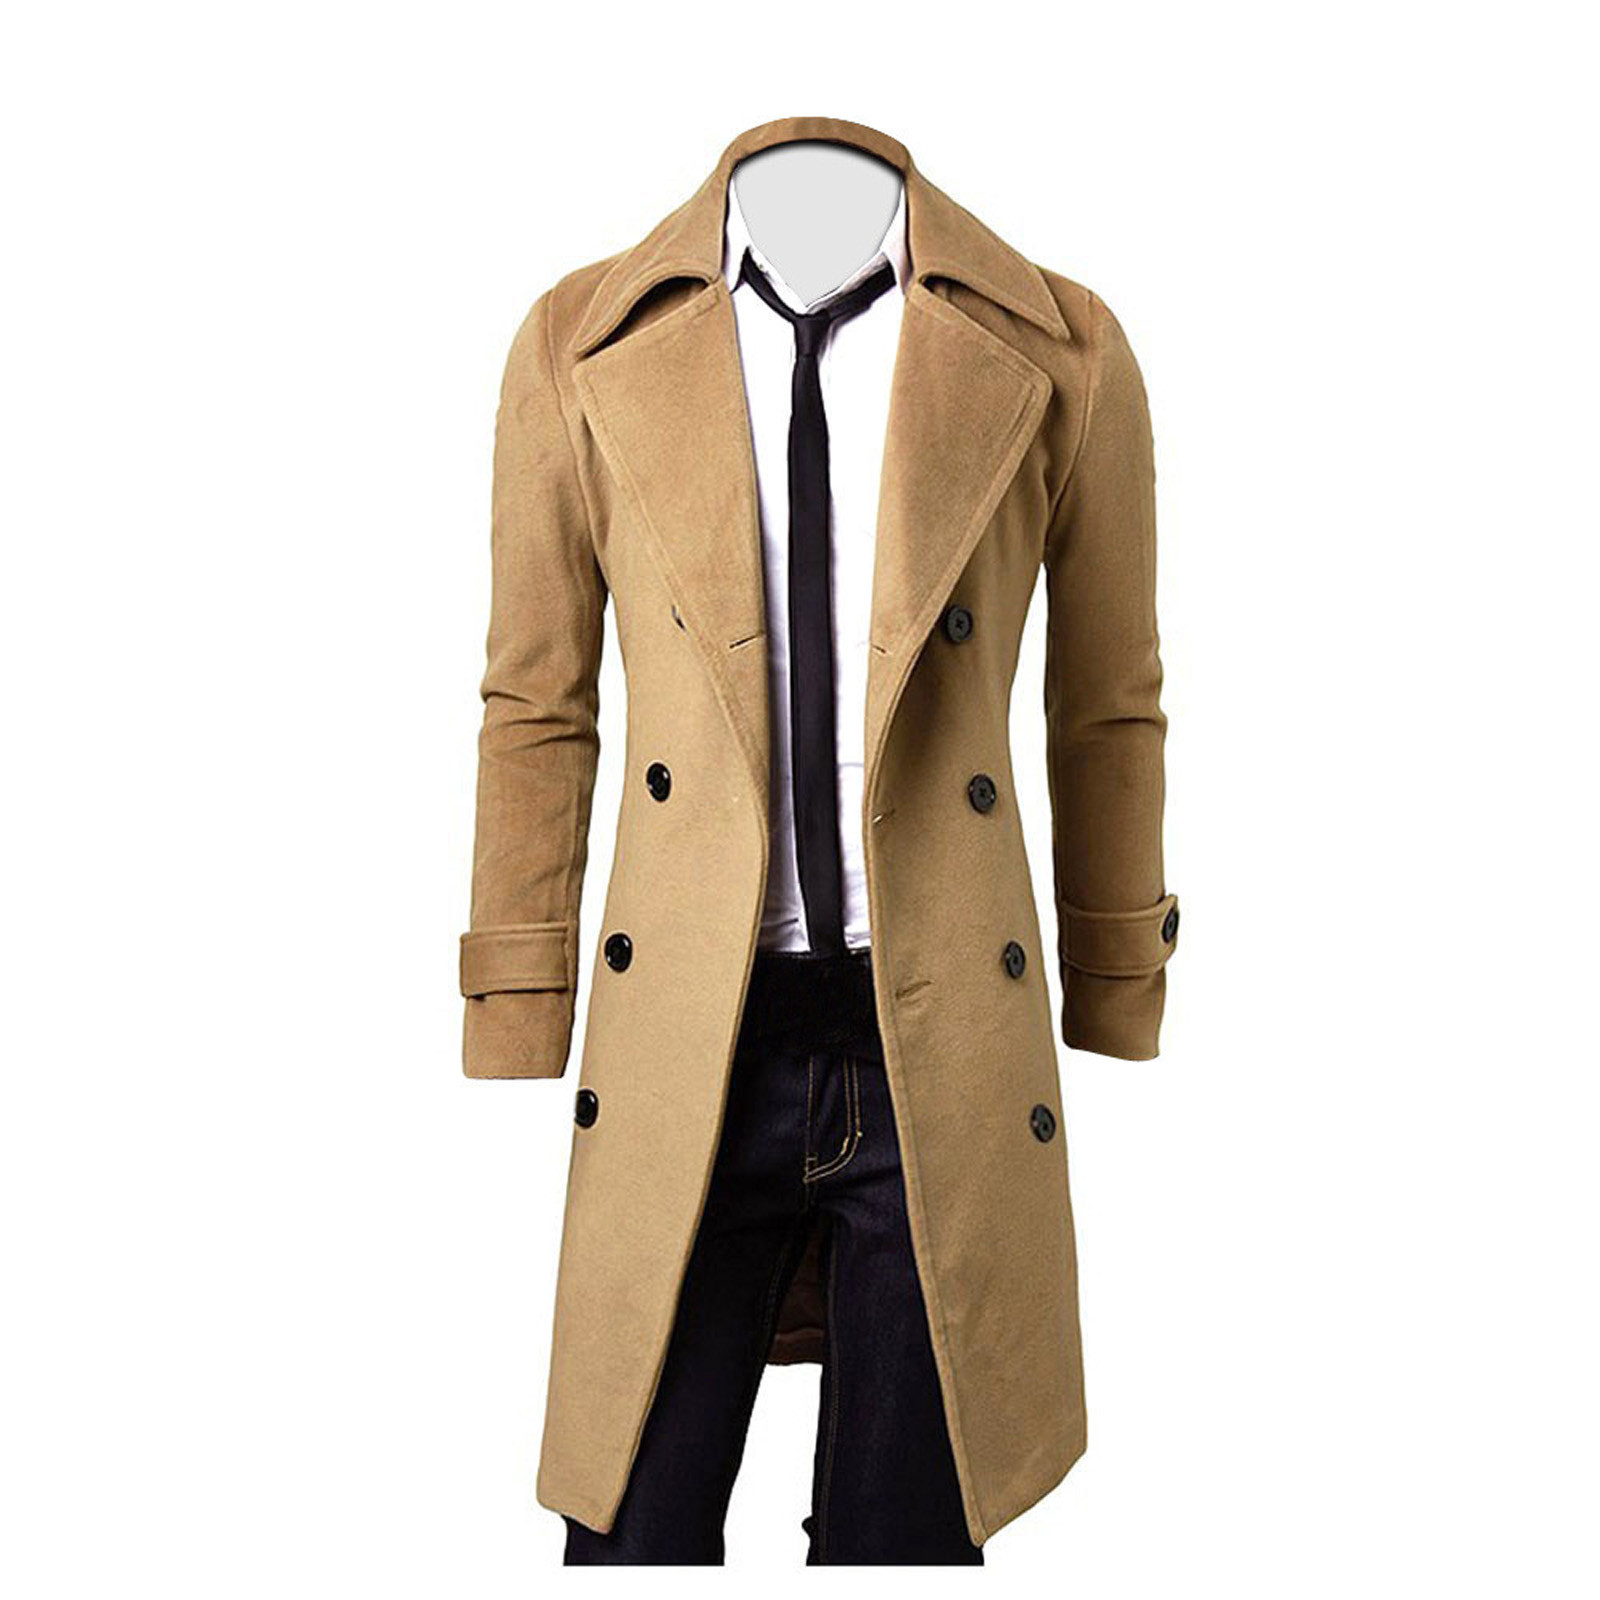 Simplmasygenix Dress Coats for Men Clearance Winter Men Slim Stylish ...